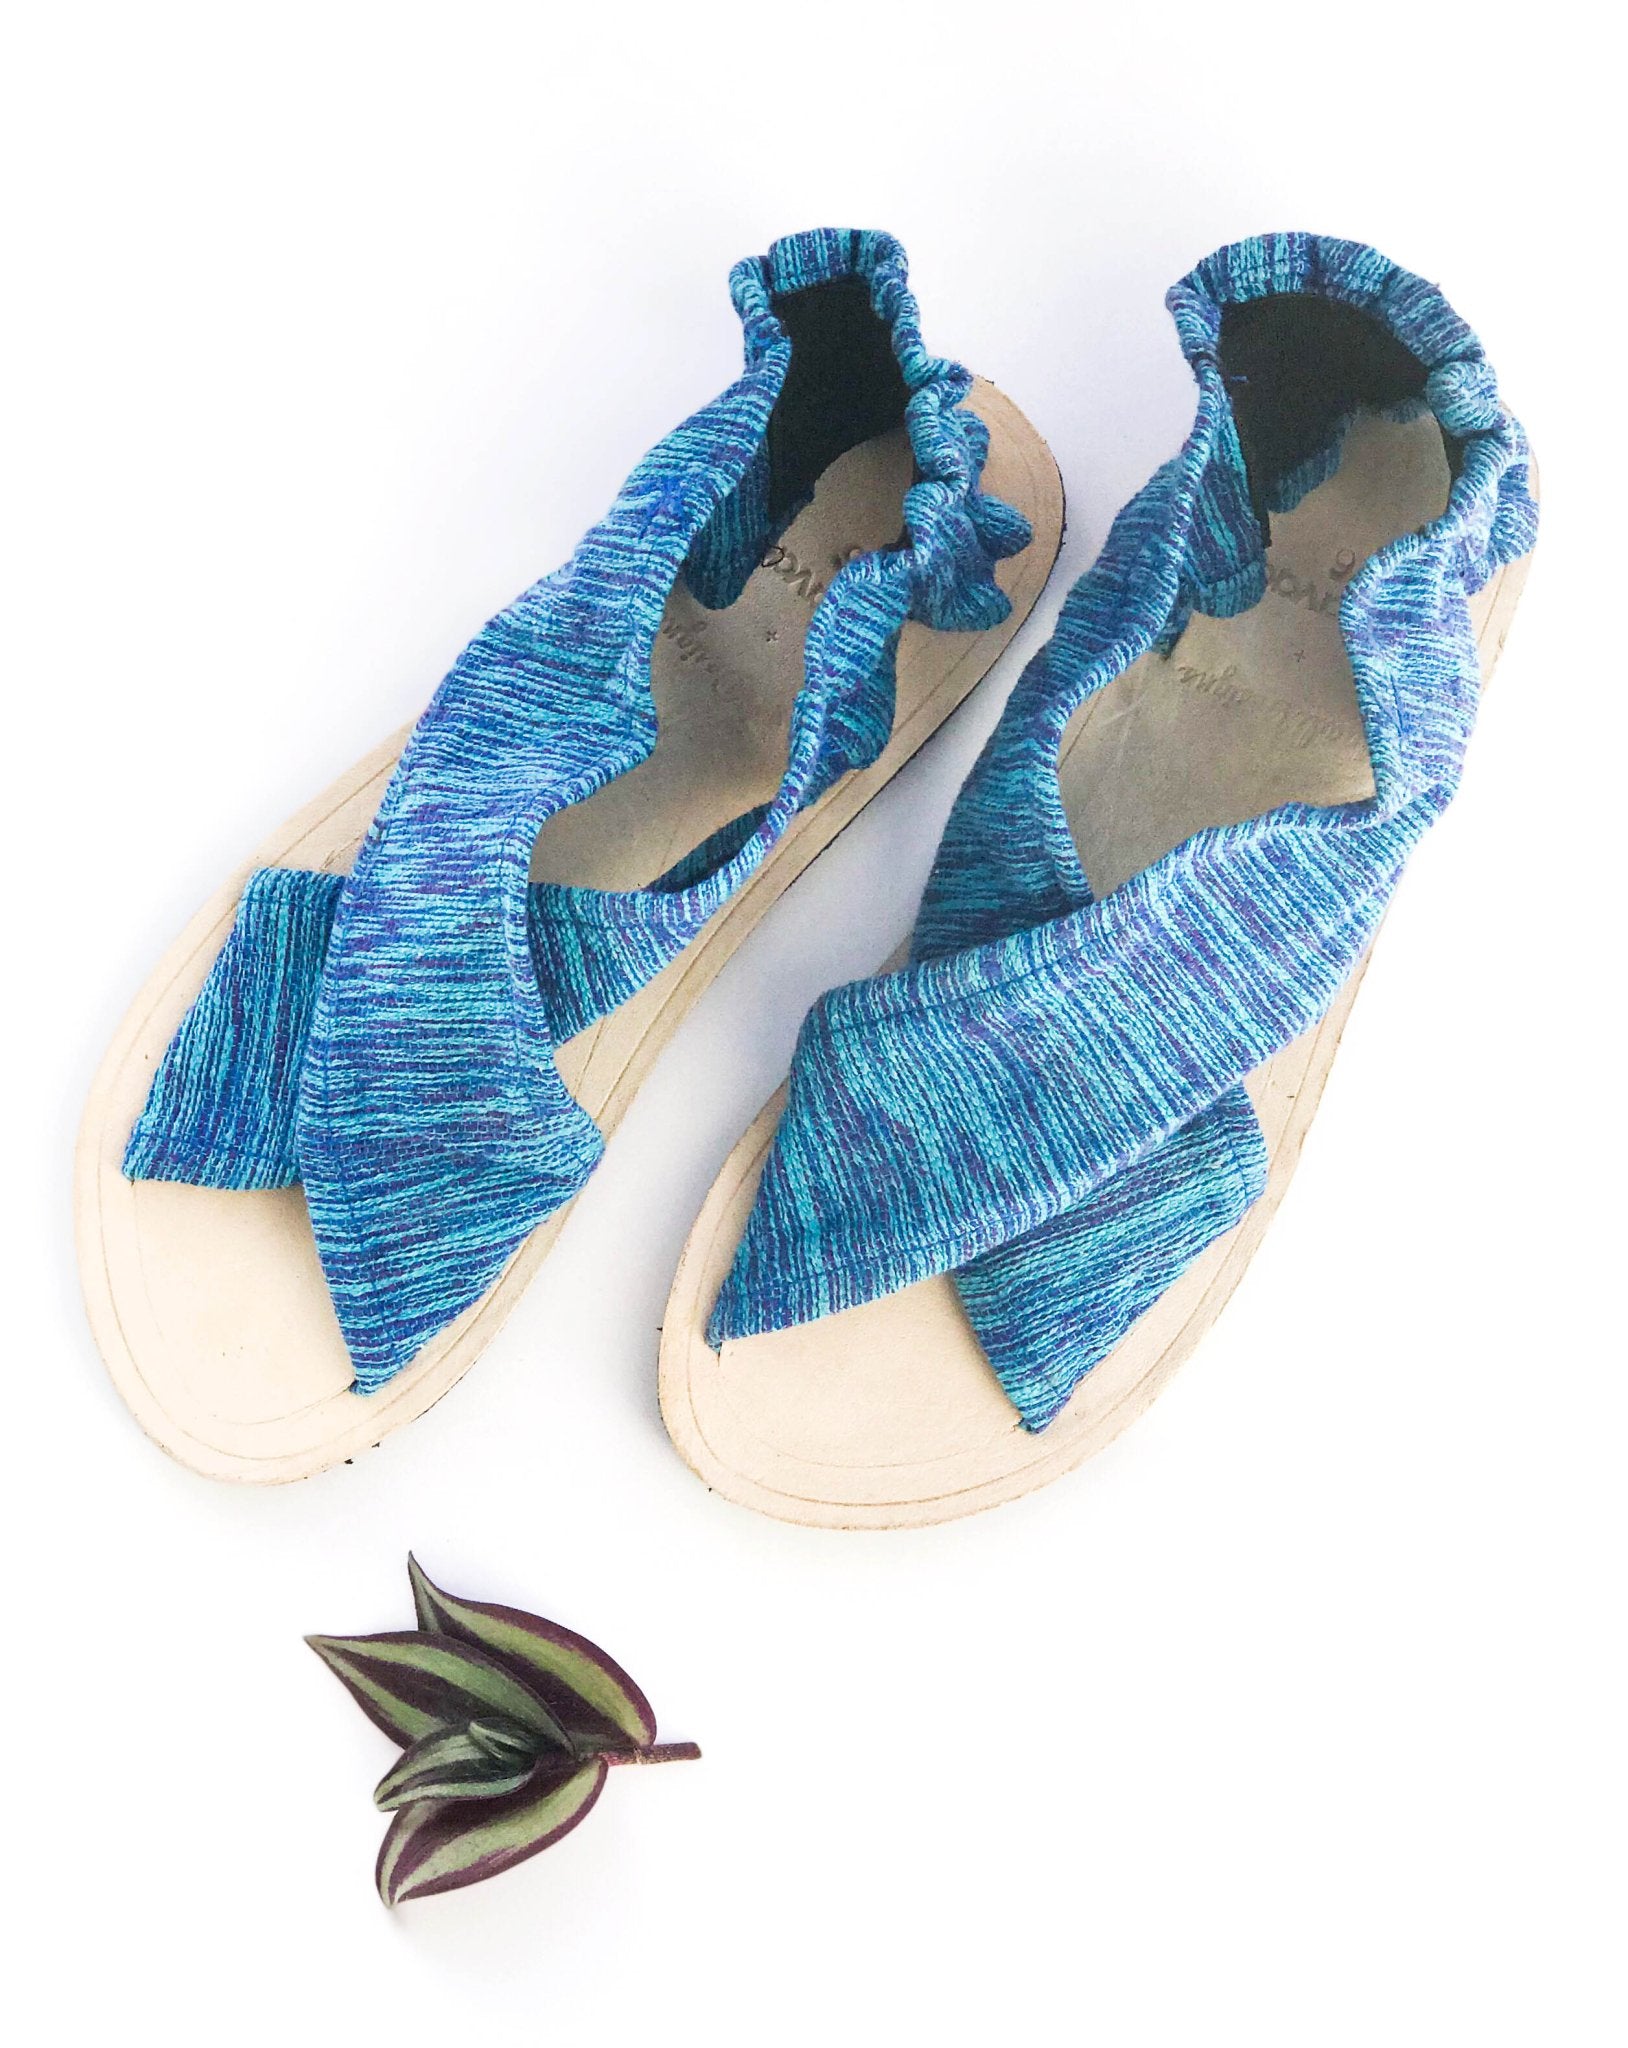 Sea Gladiator Sandals - Alternatives Global Marketplace